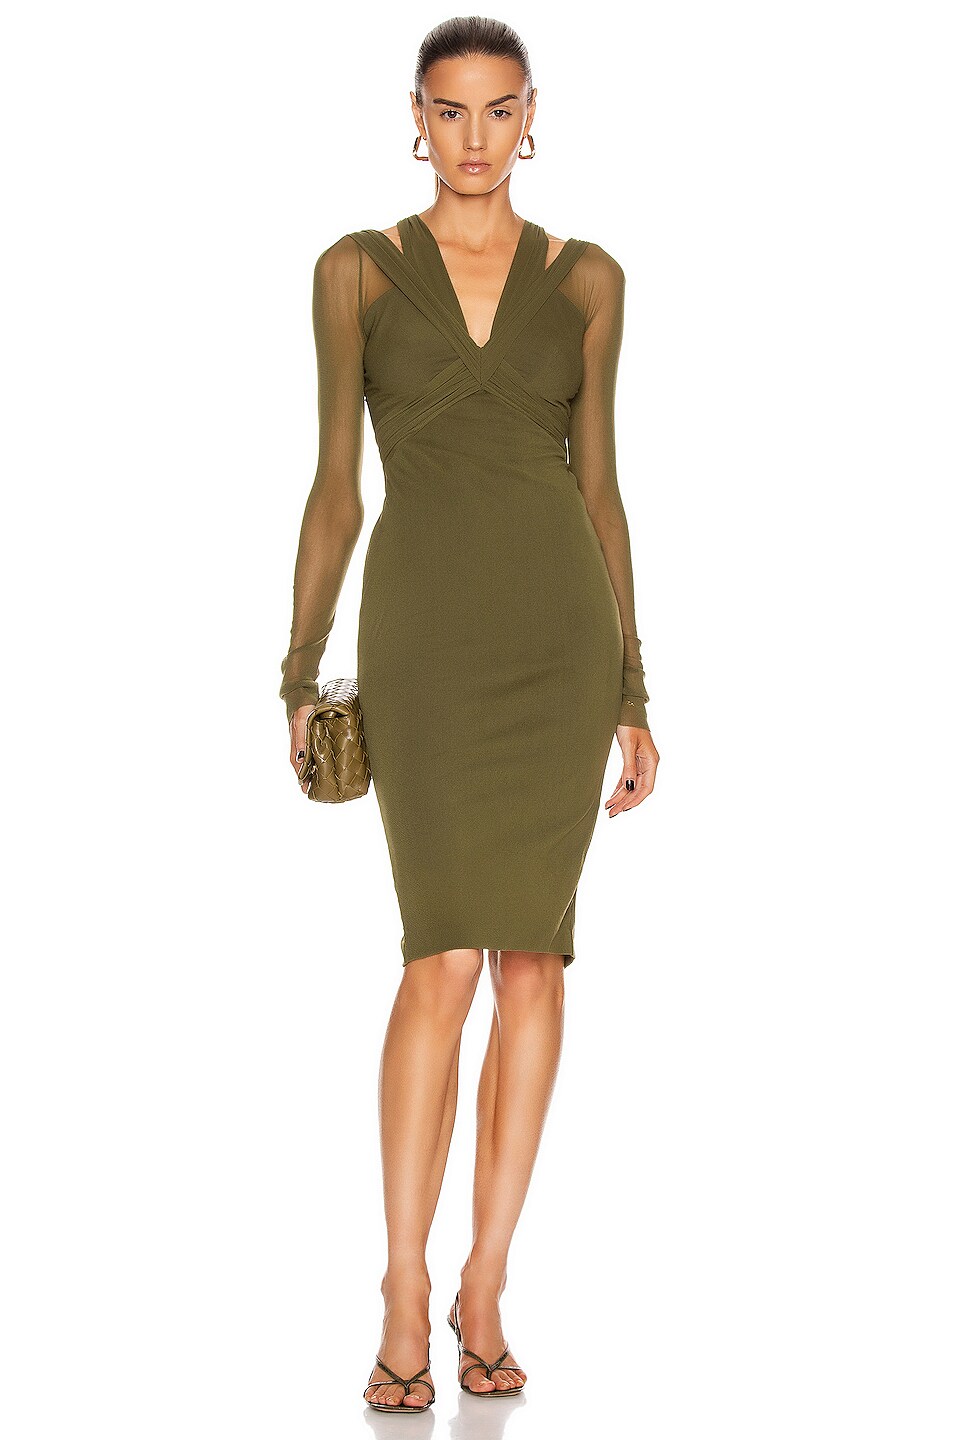 Noam for FWRD Daria Dress in Olive | FWRD